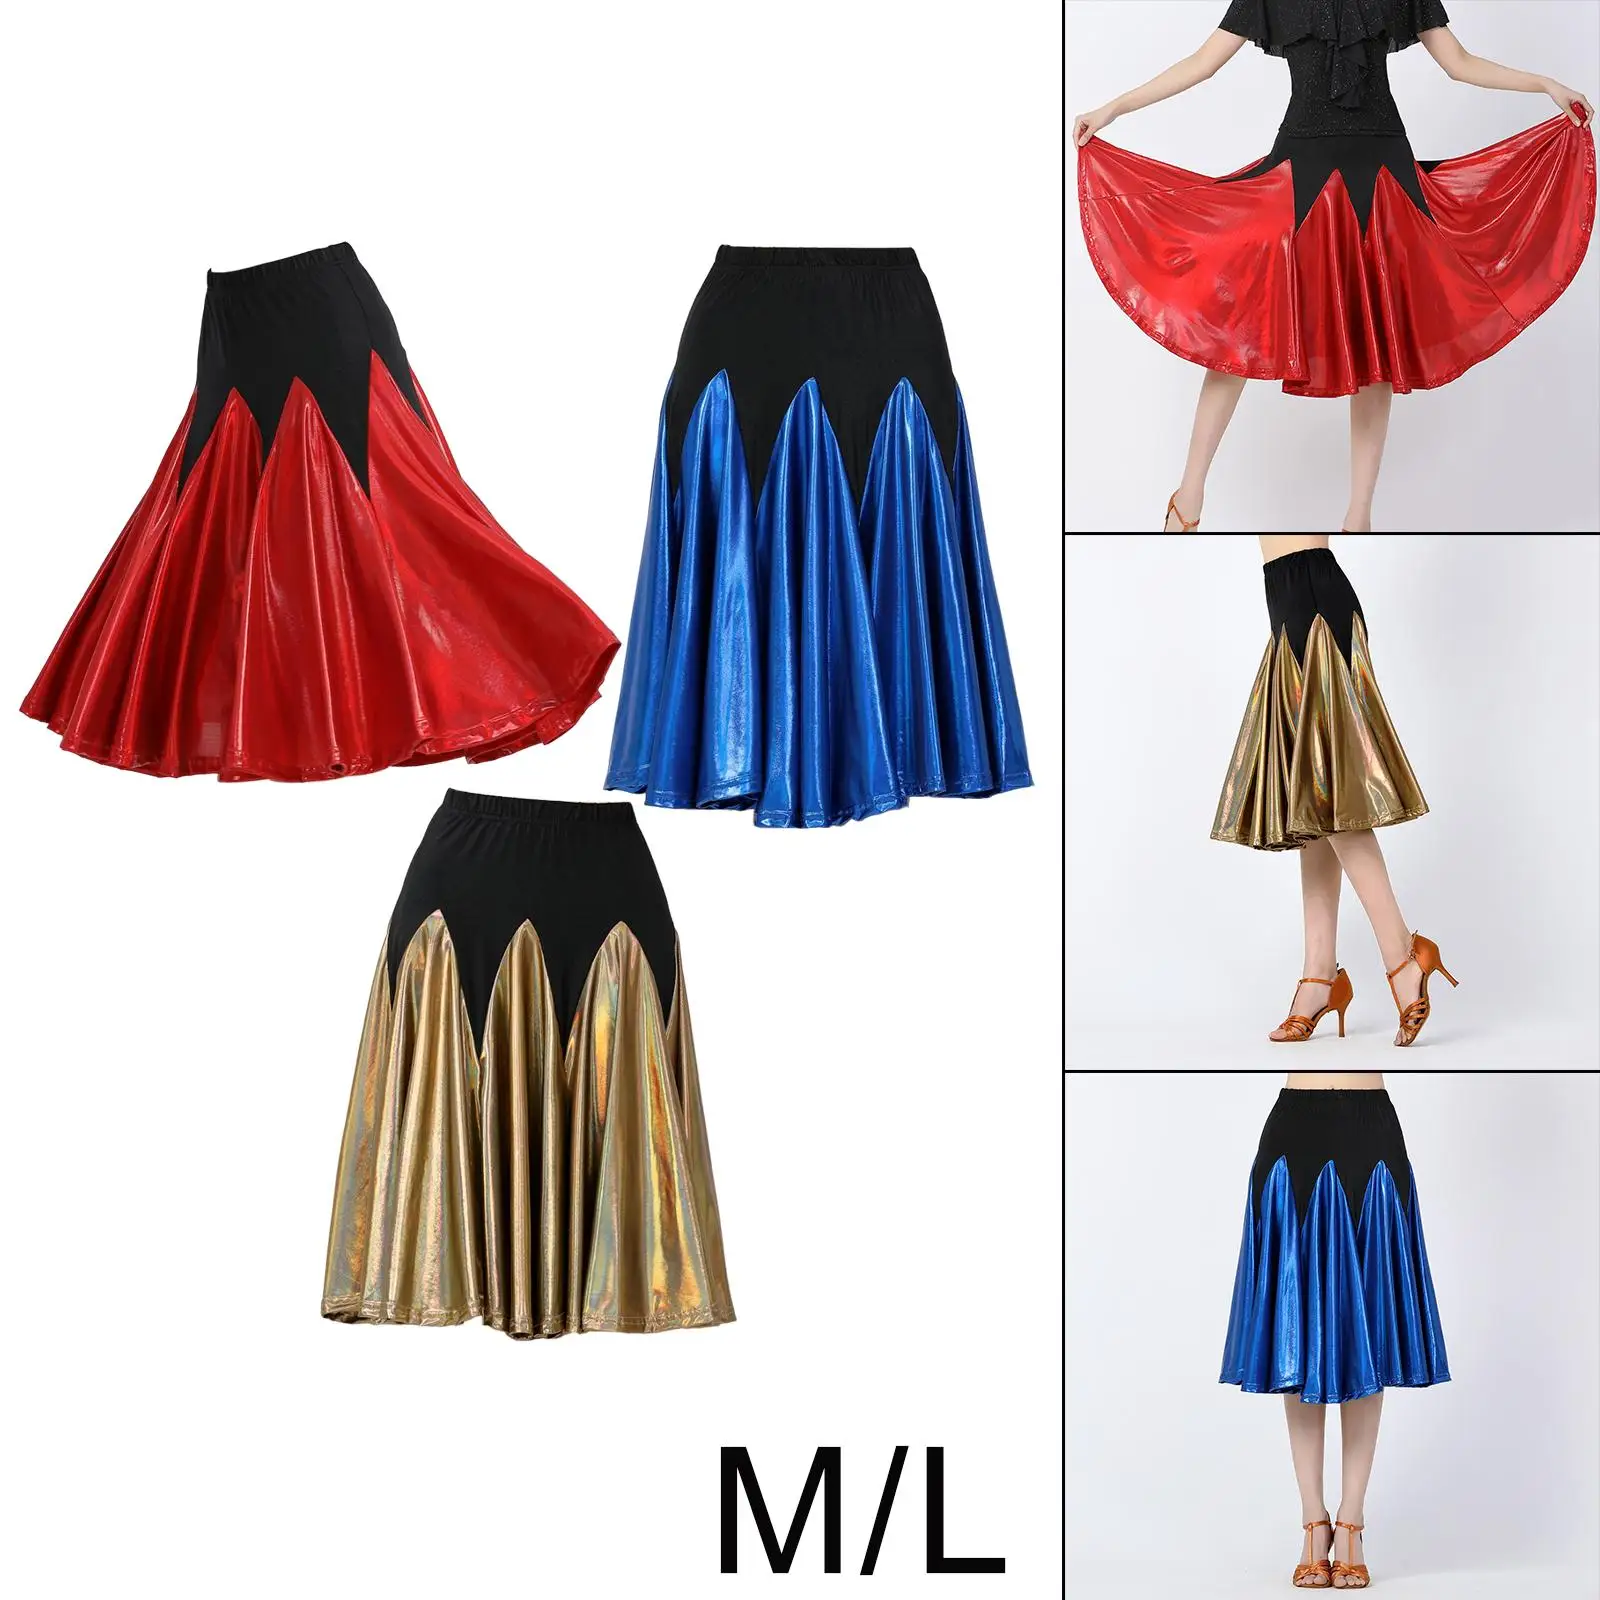 Women Ballroom Dance Skirts for Waltz Cha Cha Practice, Party Dress Modern Tango Latin Dancewear Clothing Big Swing Skirts